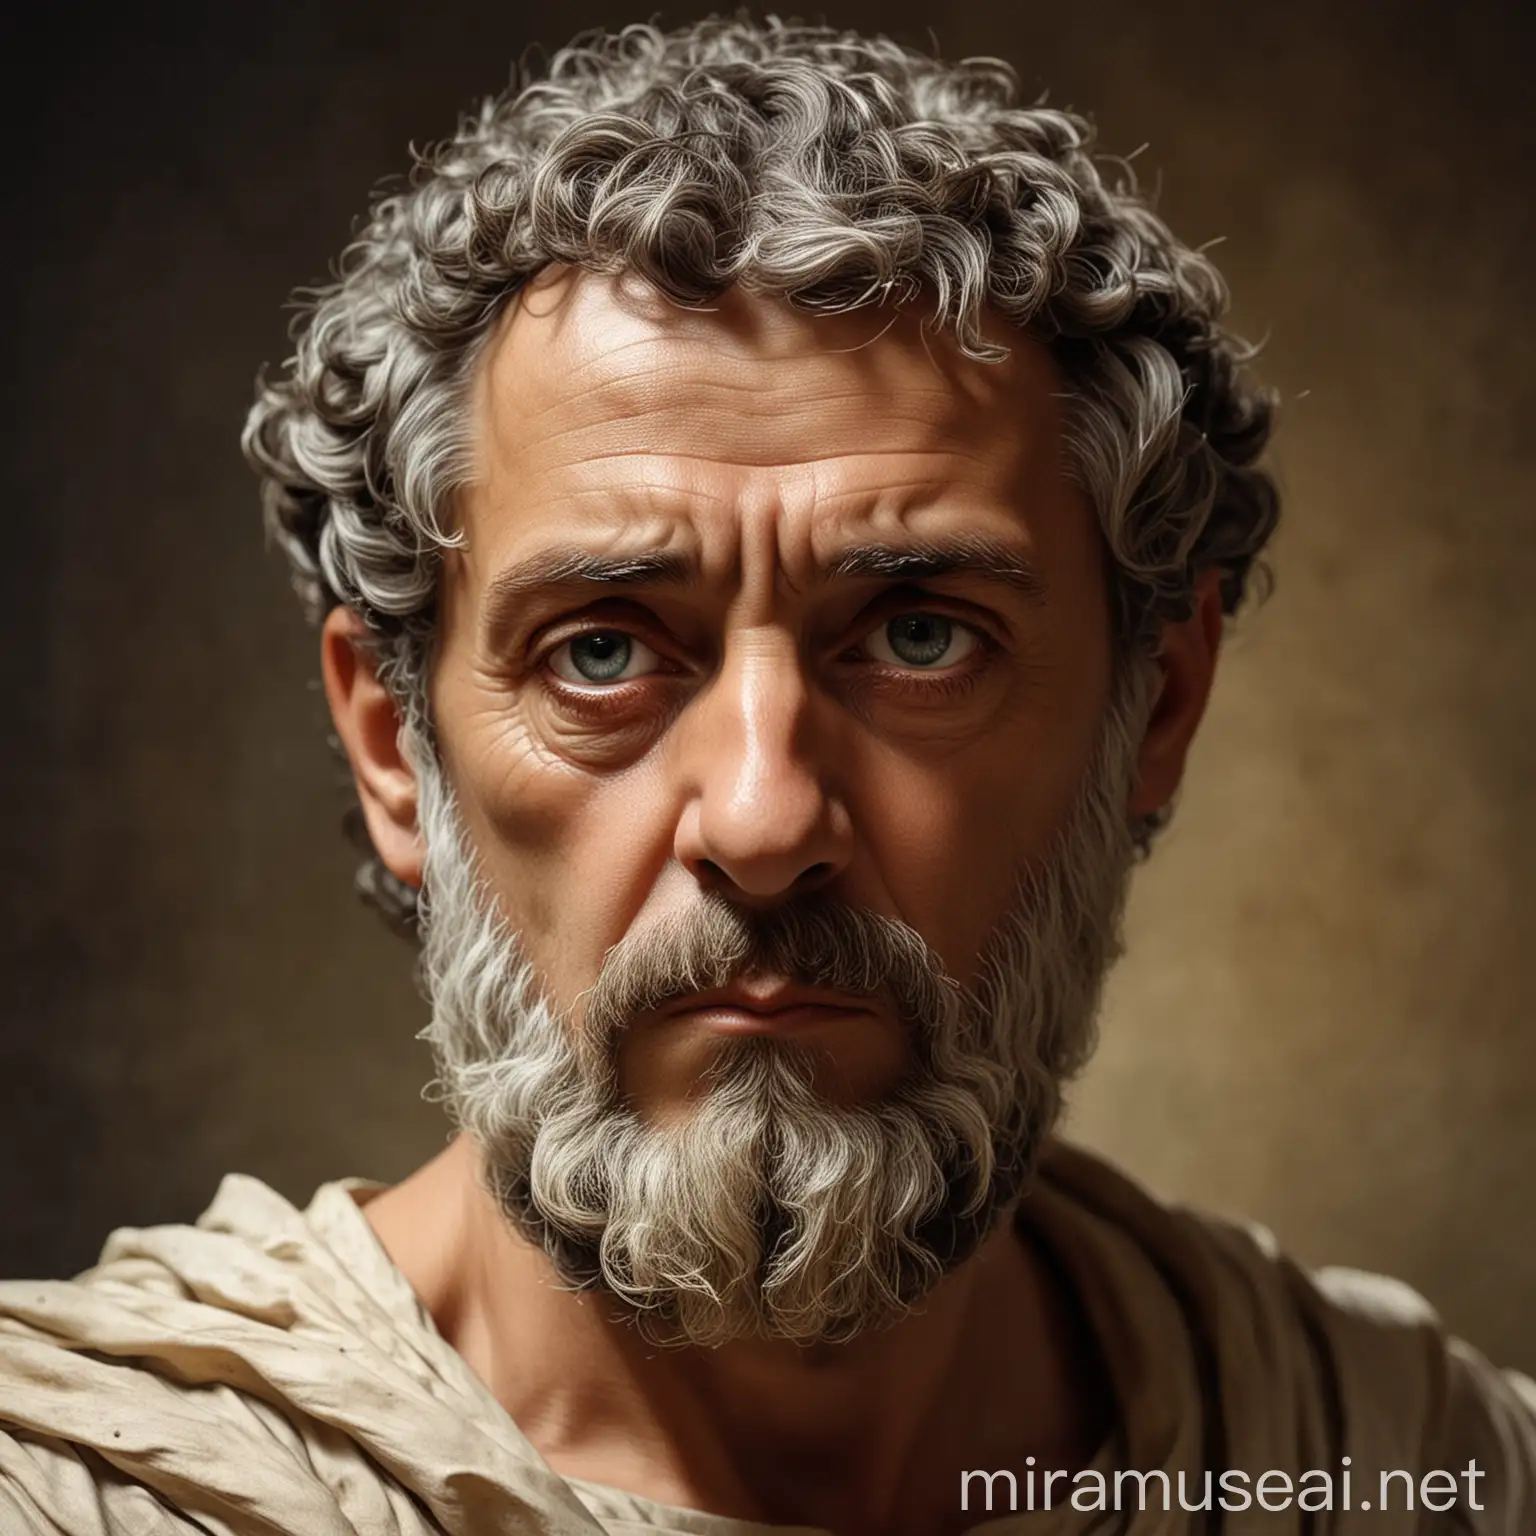 Stoic Philosopher Portrait with Straightforward Gaze